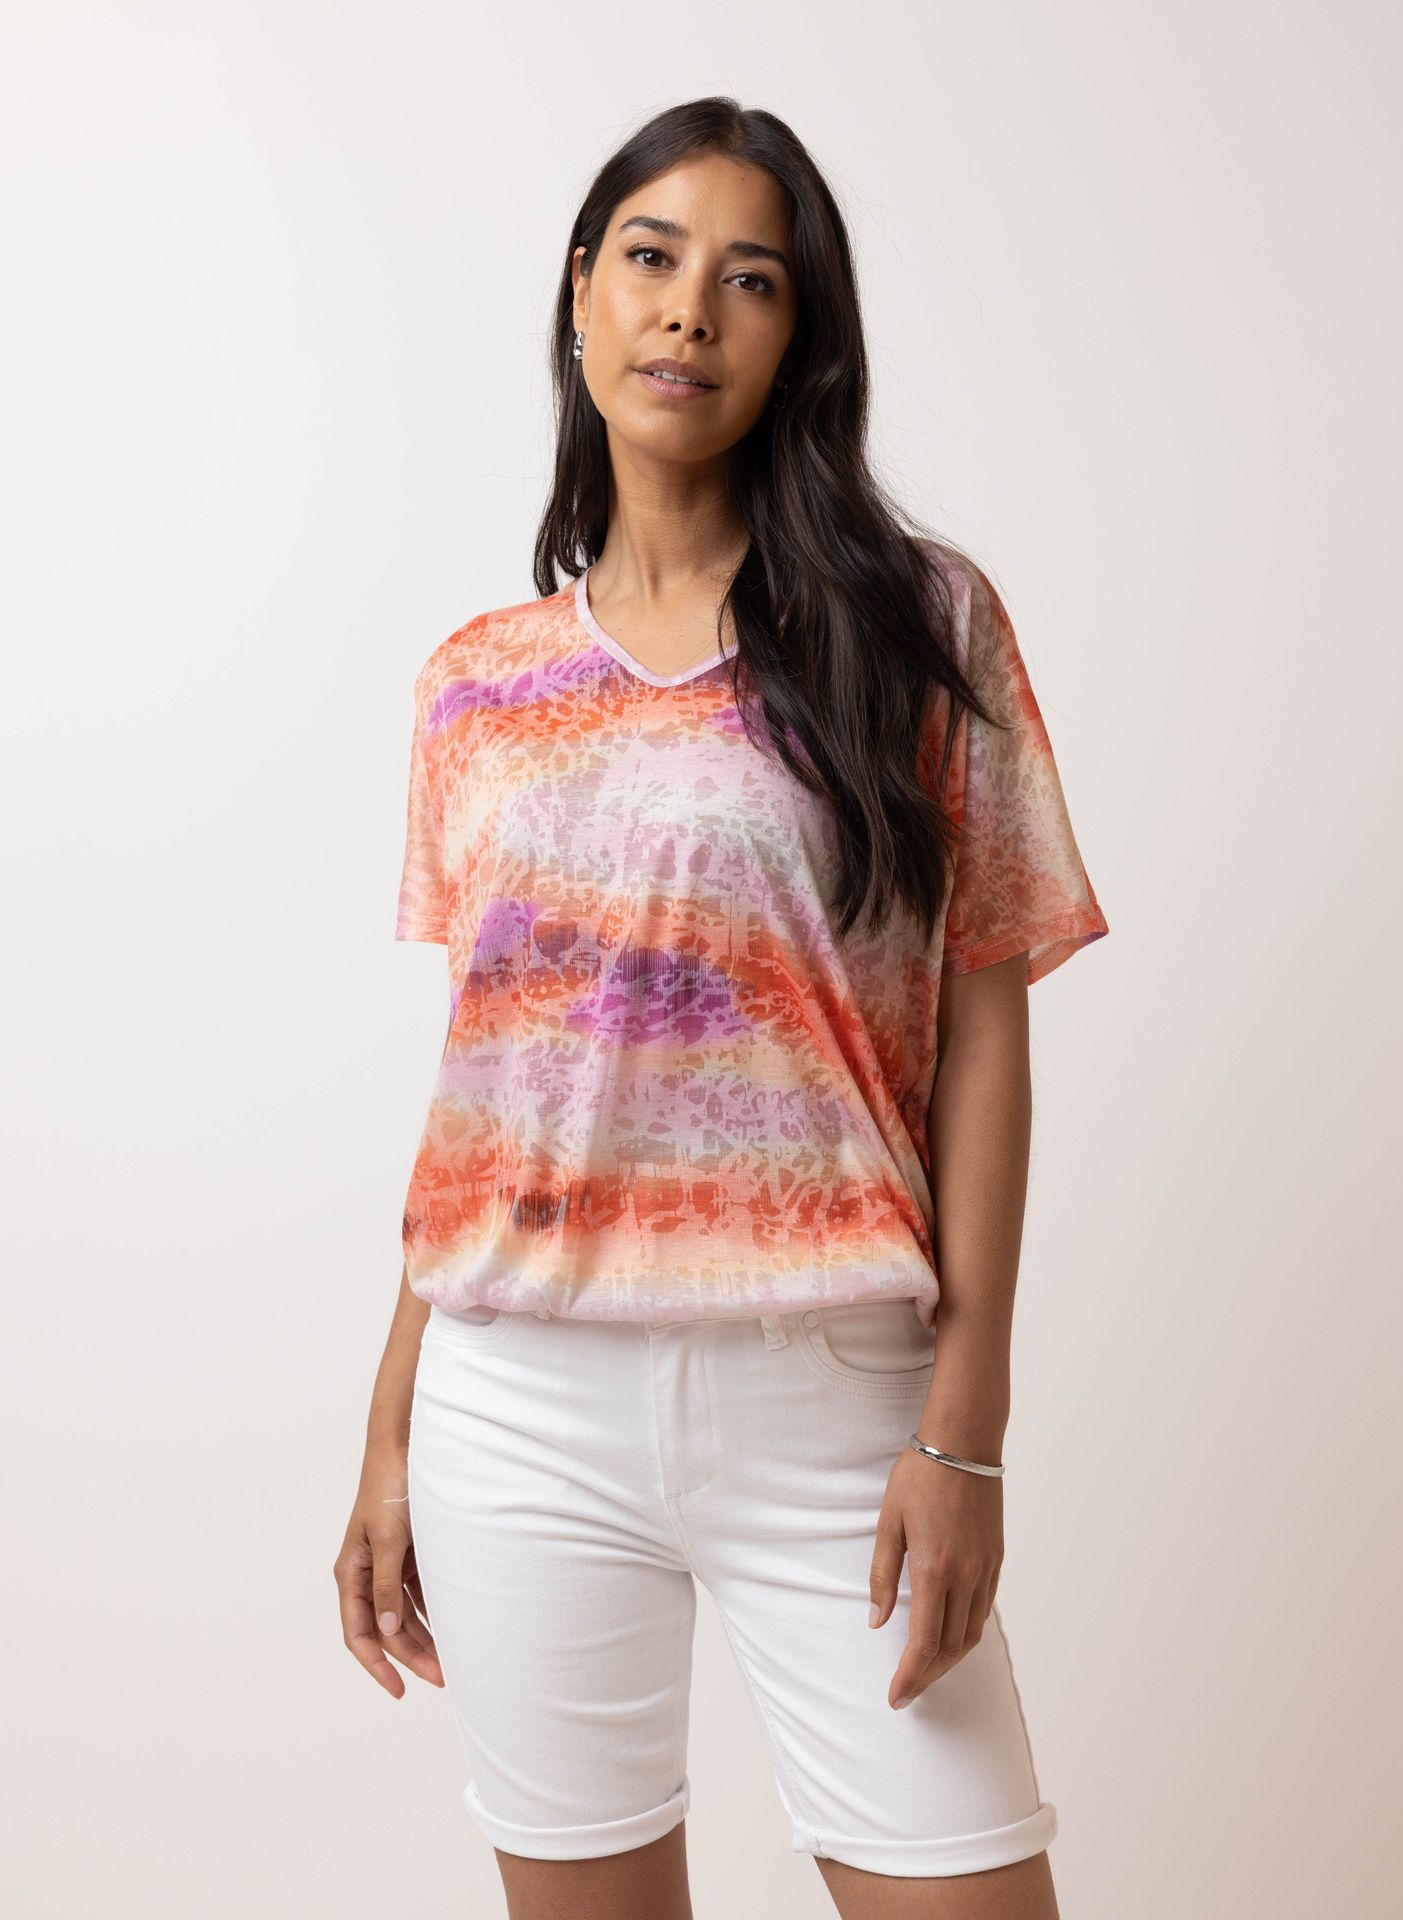 Norah Oranje shirt orange multicolor 213784-720